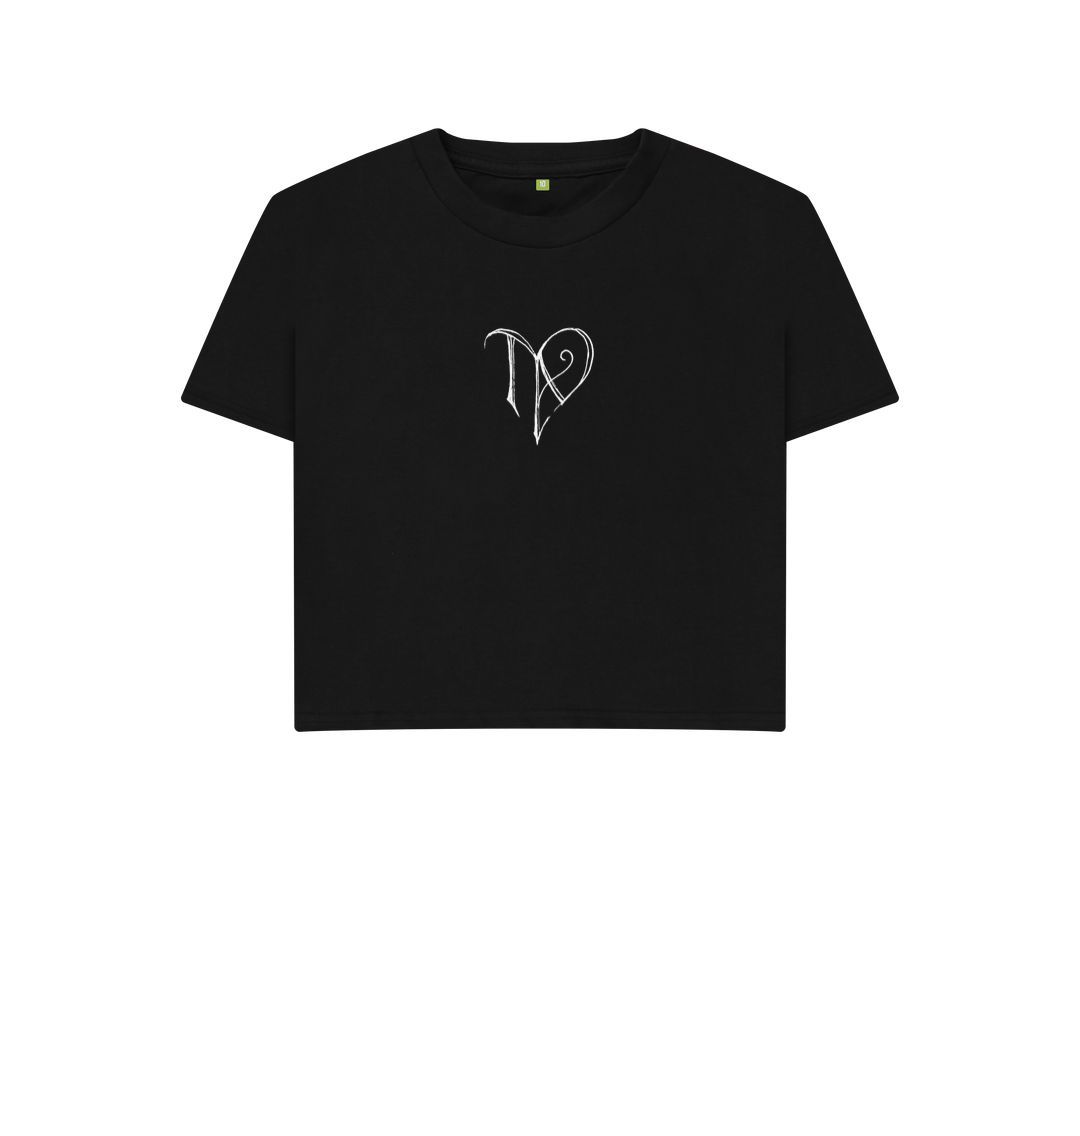 Black TAD logo on black boxy t-shirt